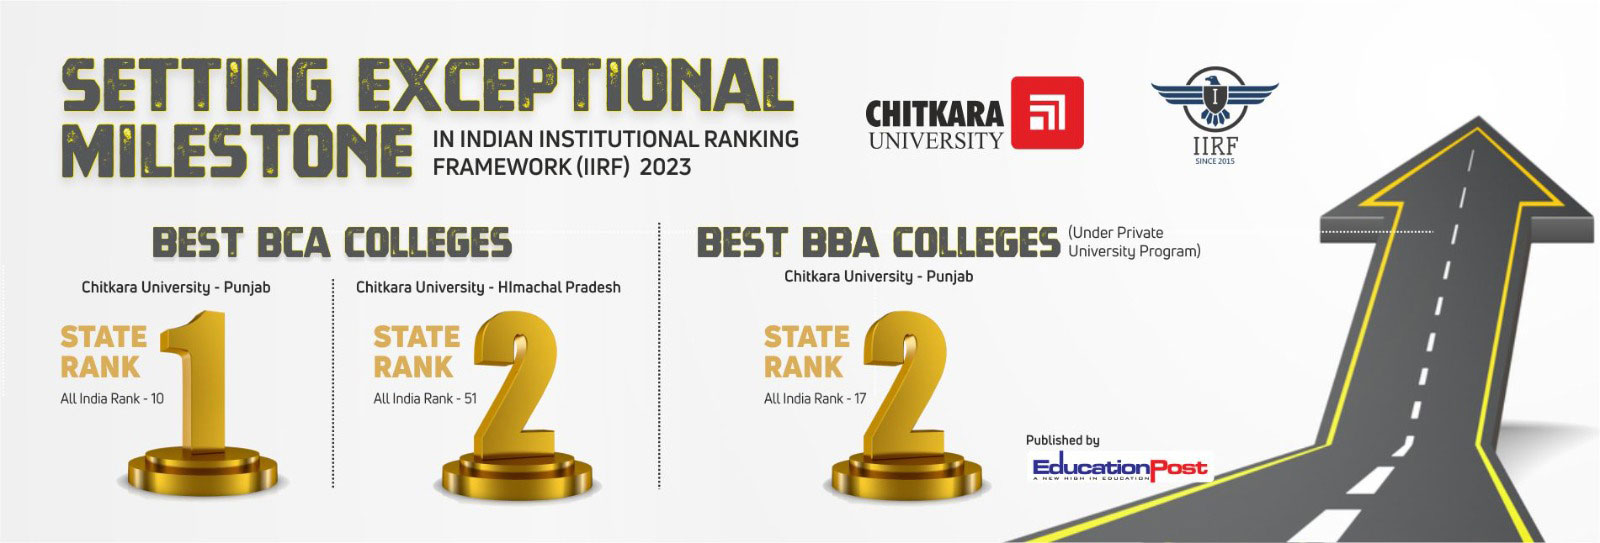 IIRF 2023 Rankings - Chitkara University